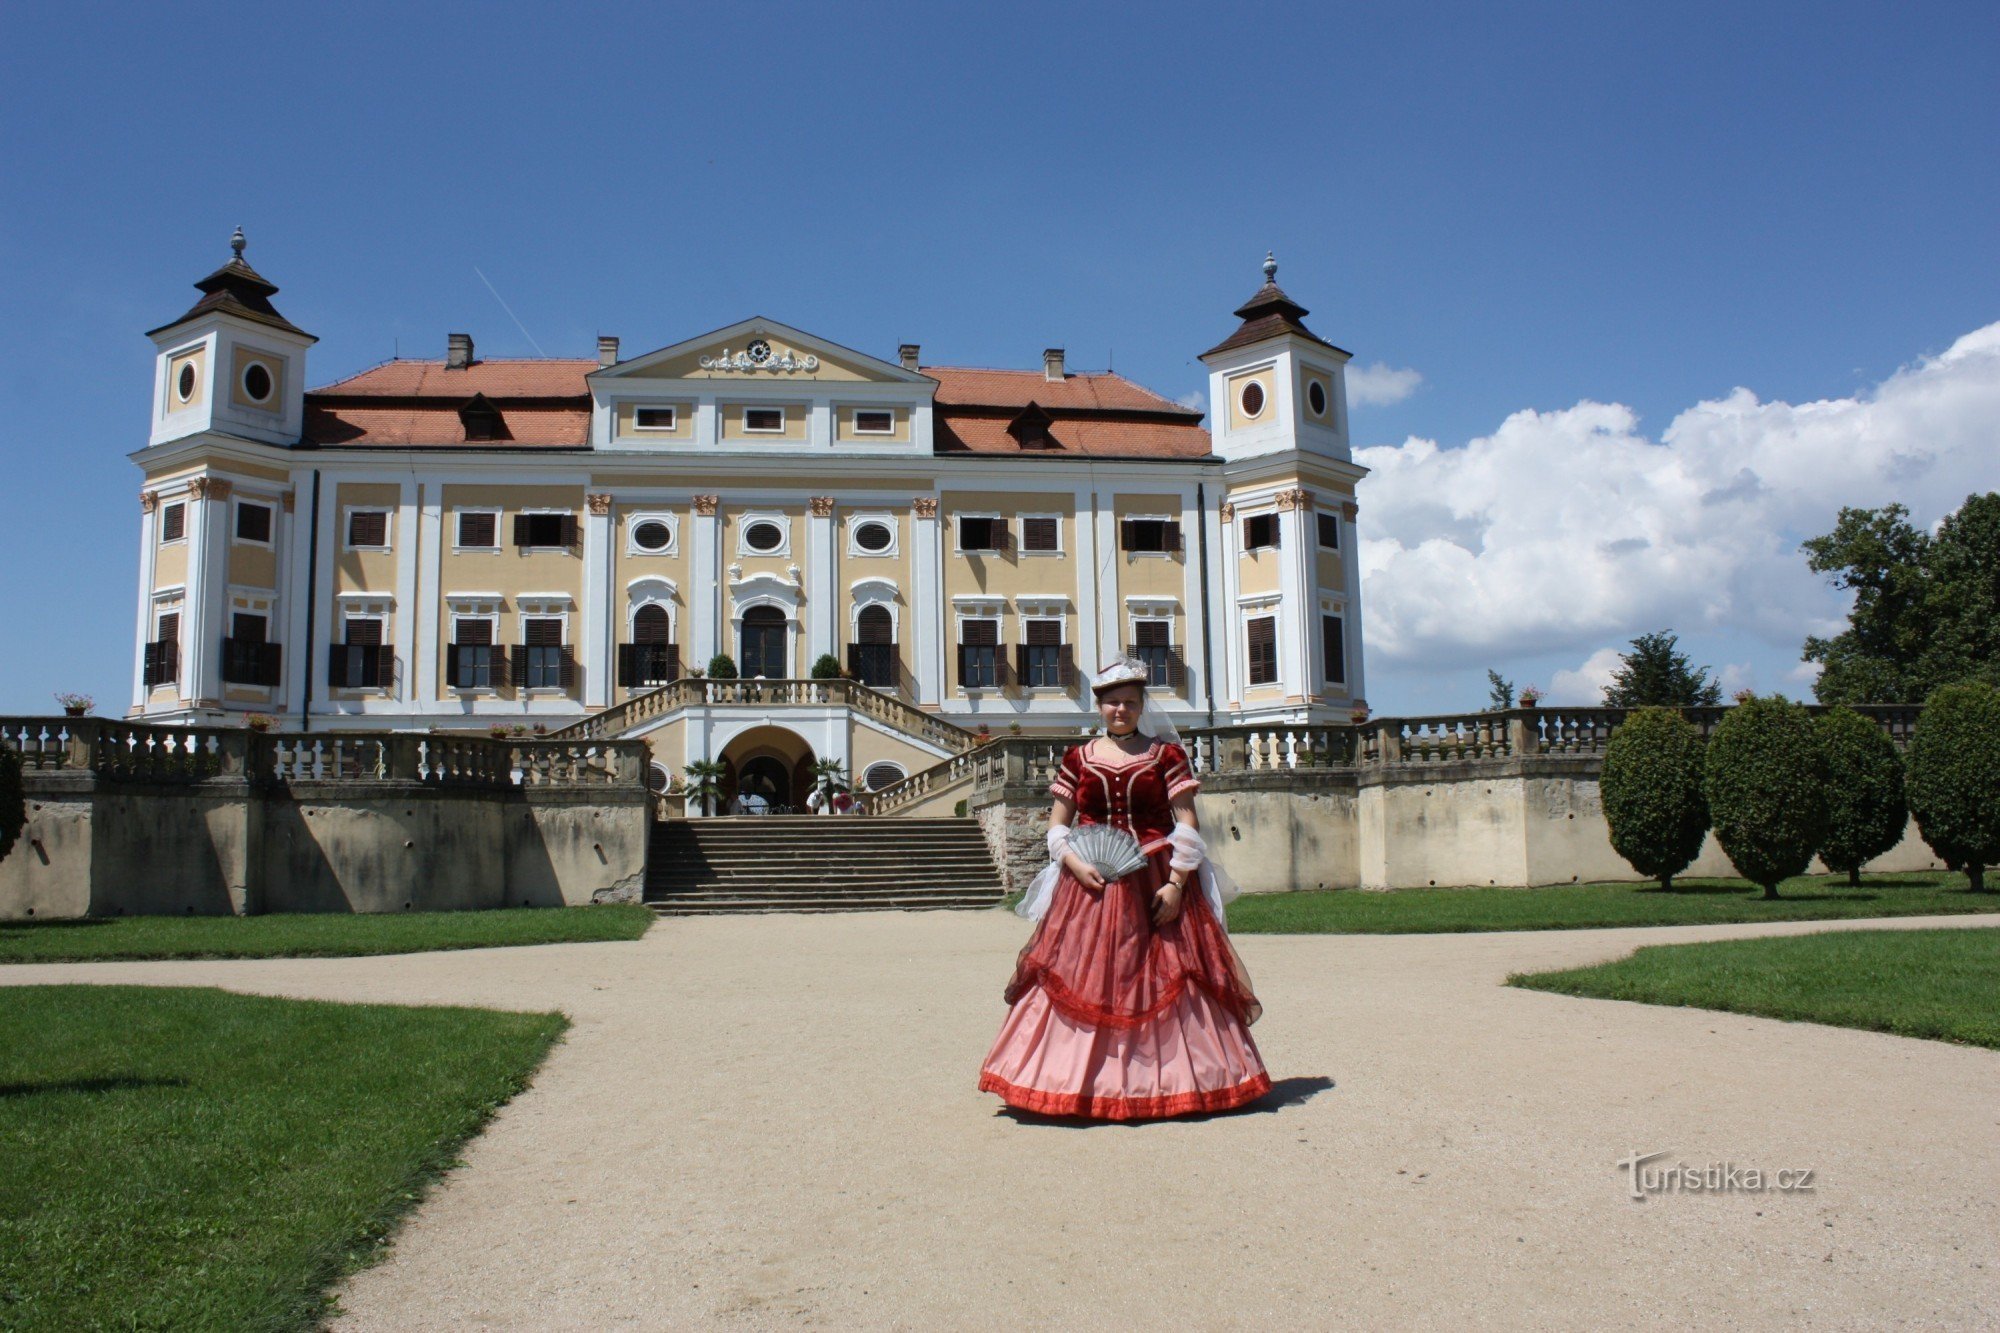 Romantic French park of Milotice castle near Kyjova